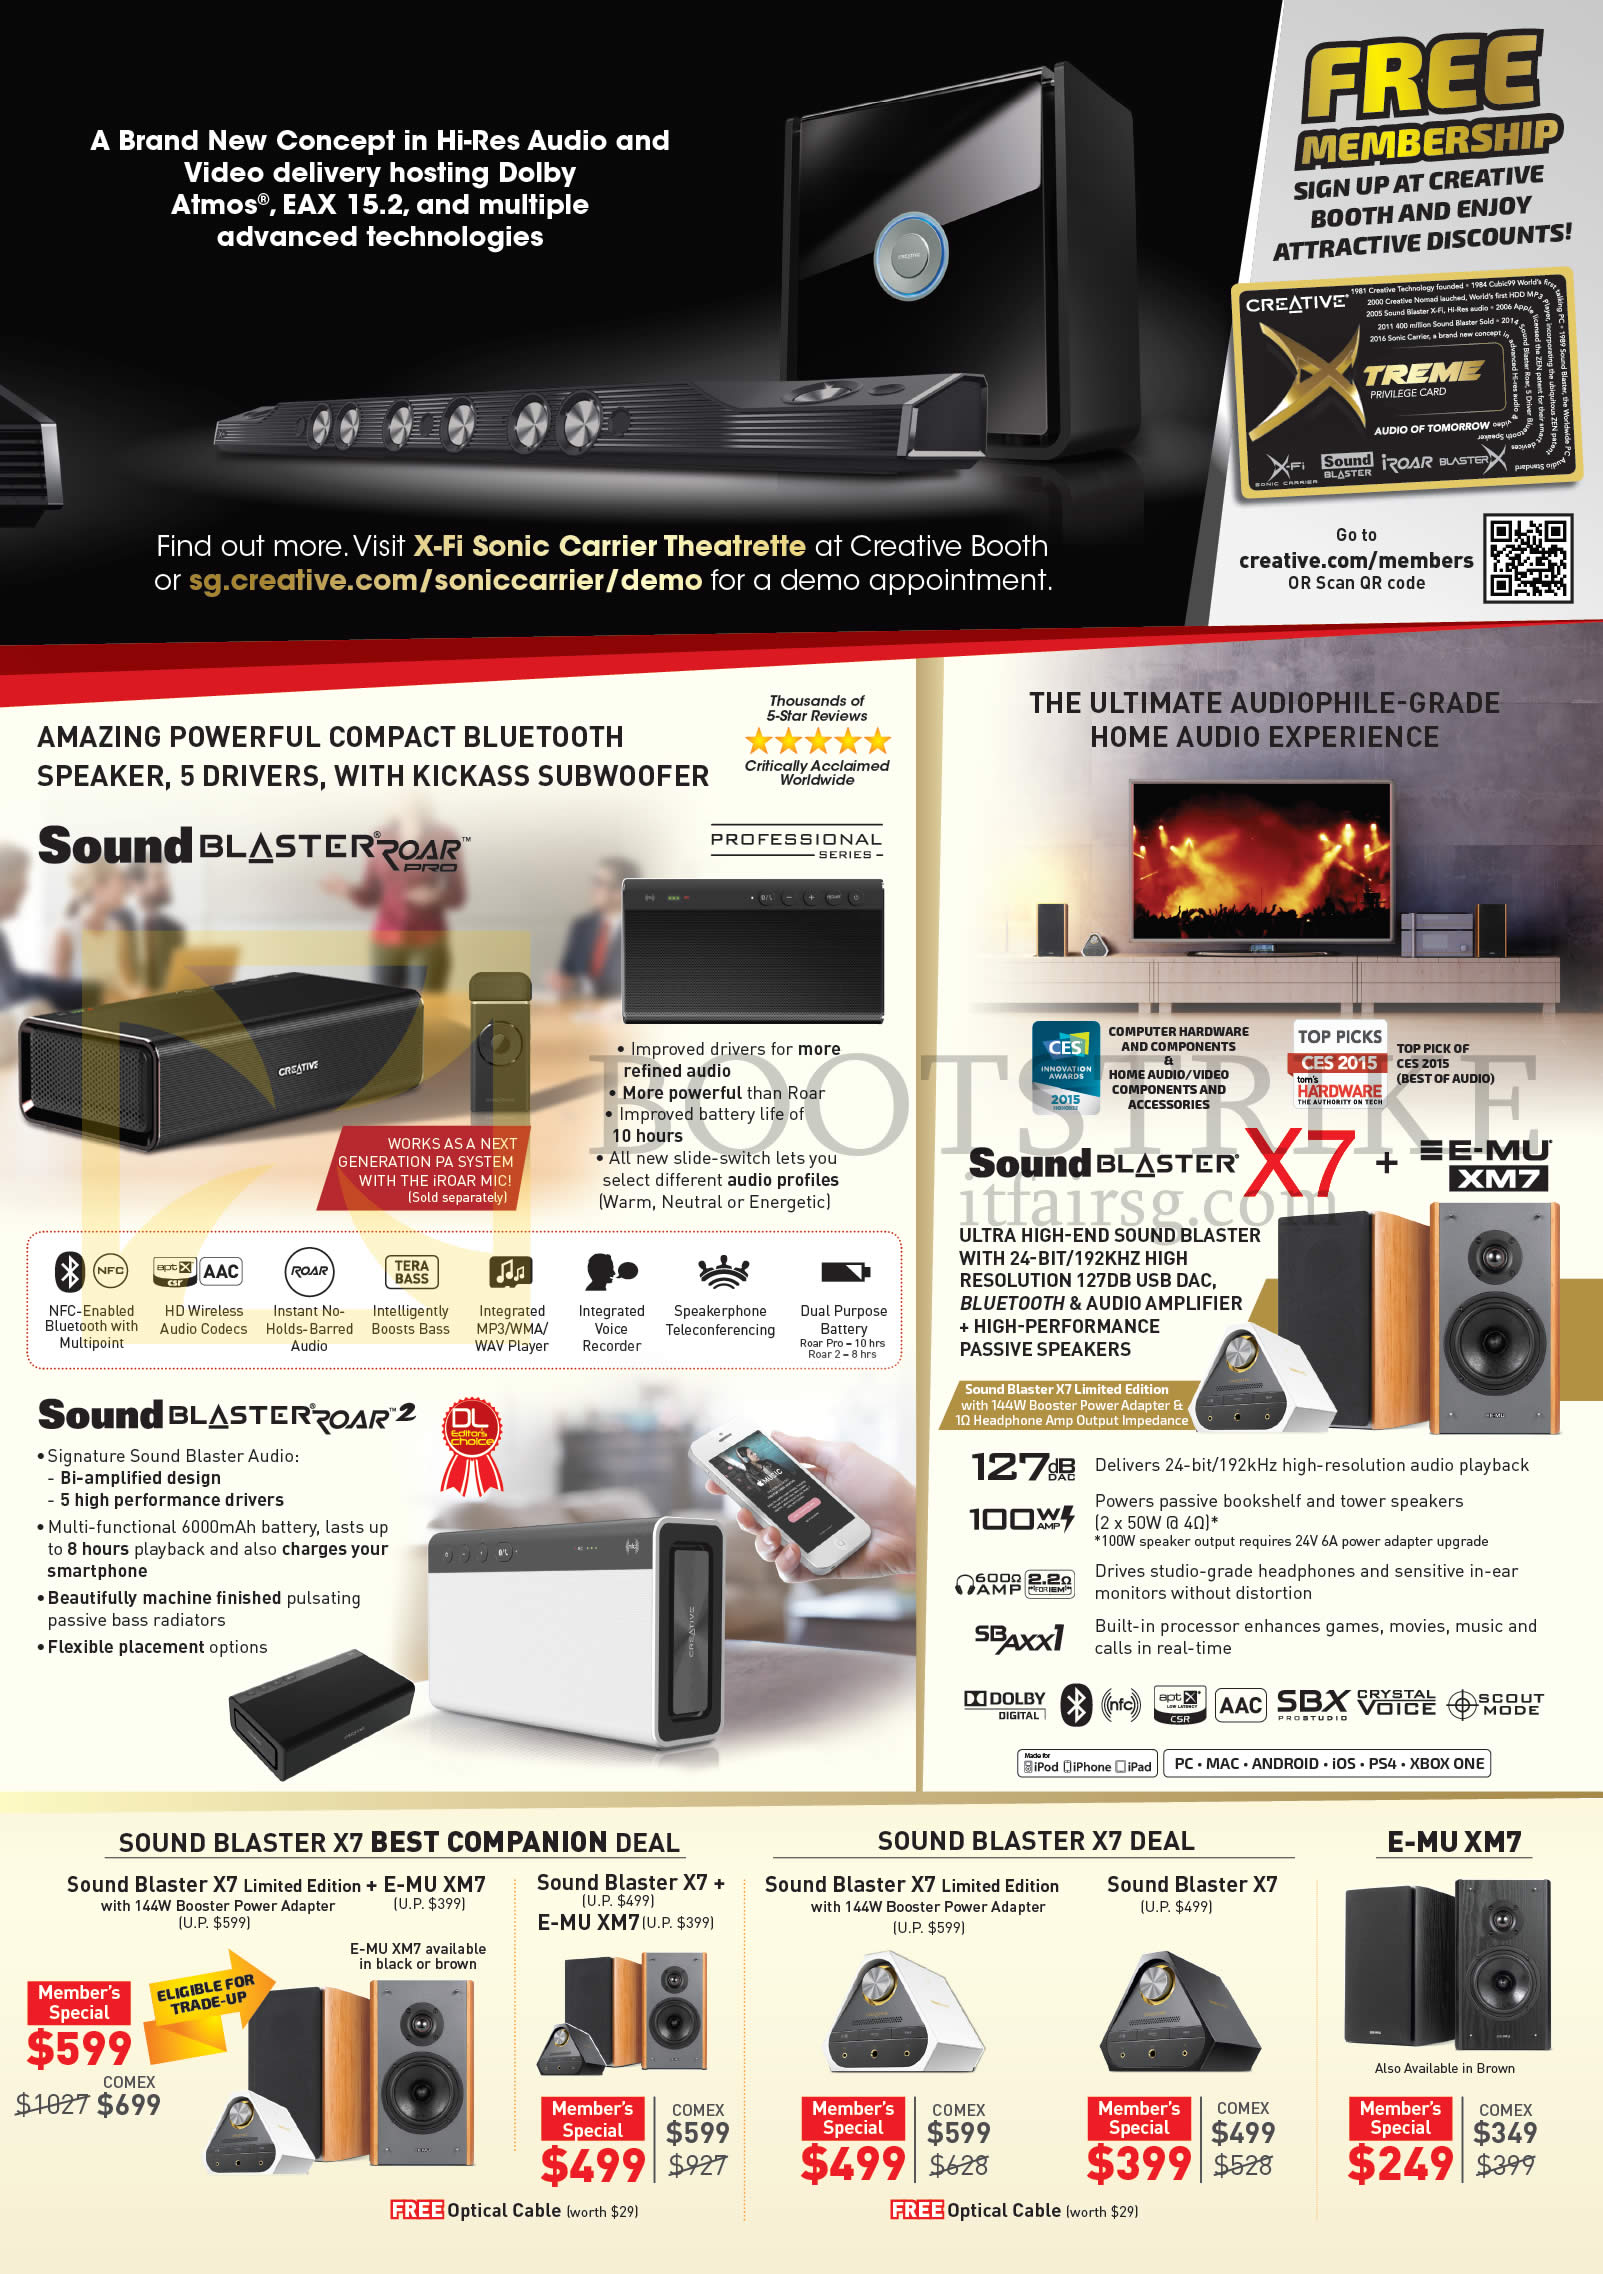 COMEX 2016 price list image brochure of Creative Deals Sound Blaster Roar, Sound Blaster Roar 2, X7, Companion Deal, X7 Deal, E-MU XM7